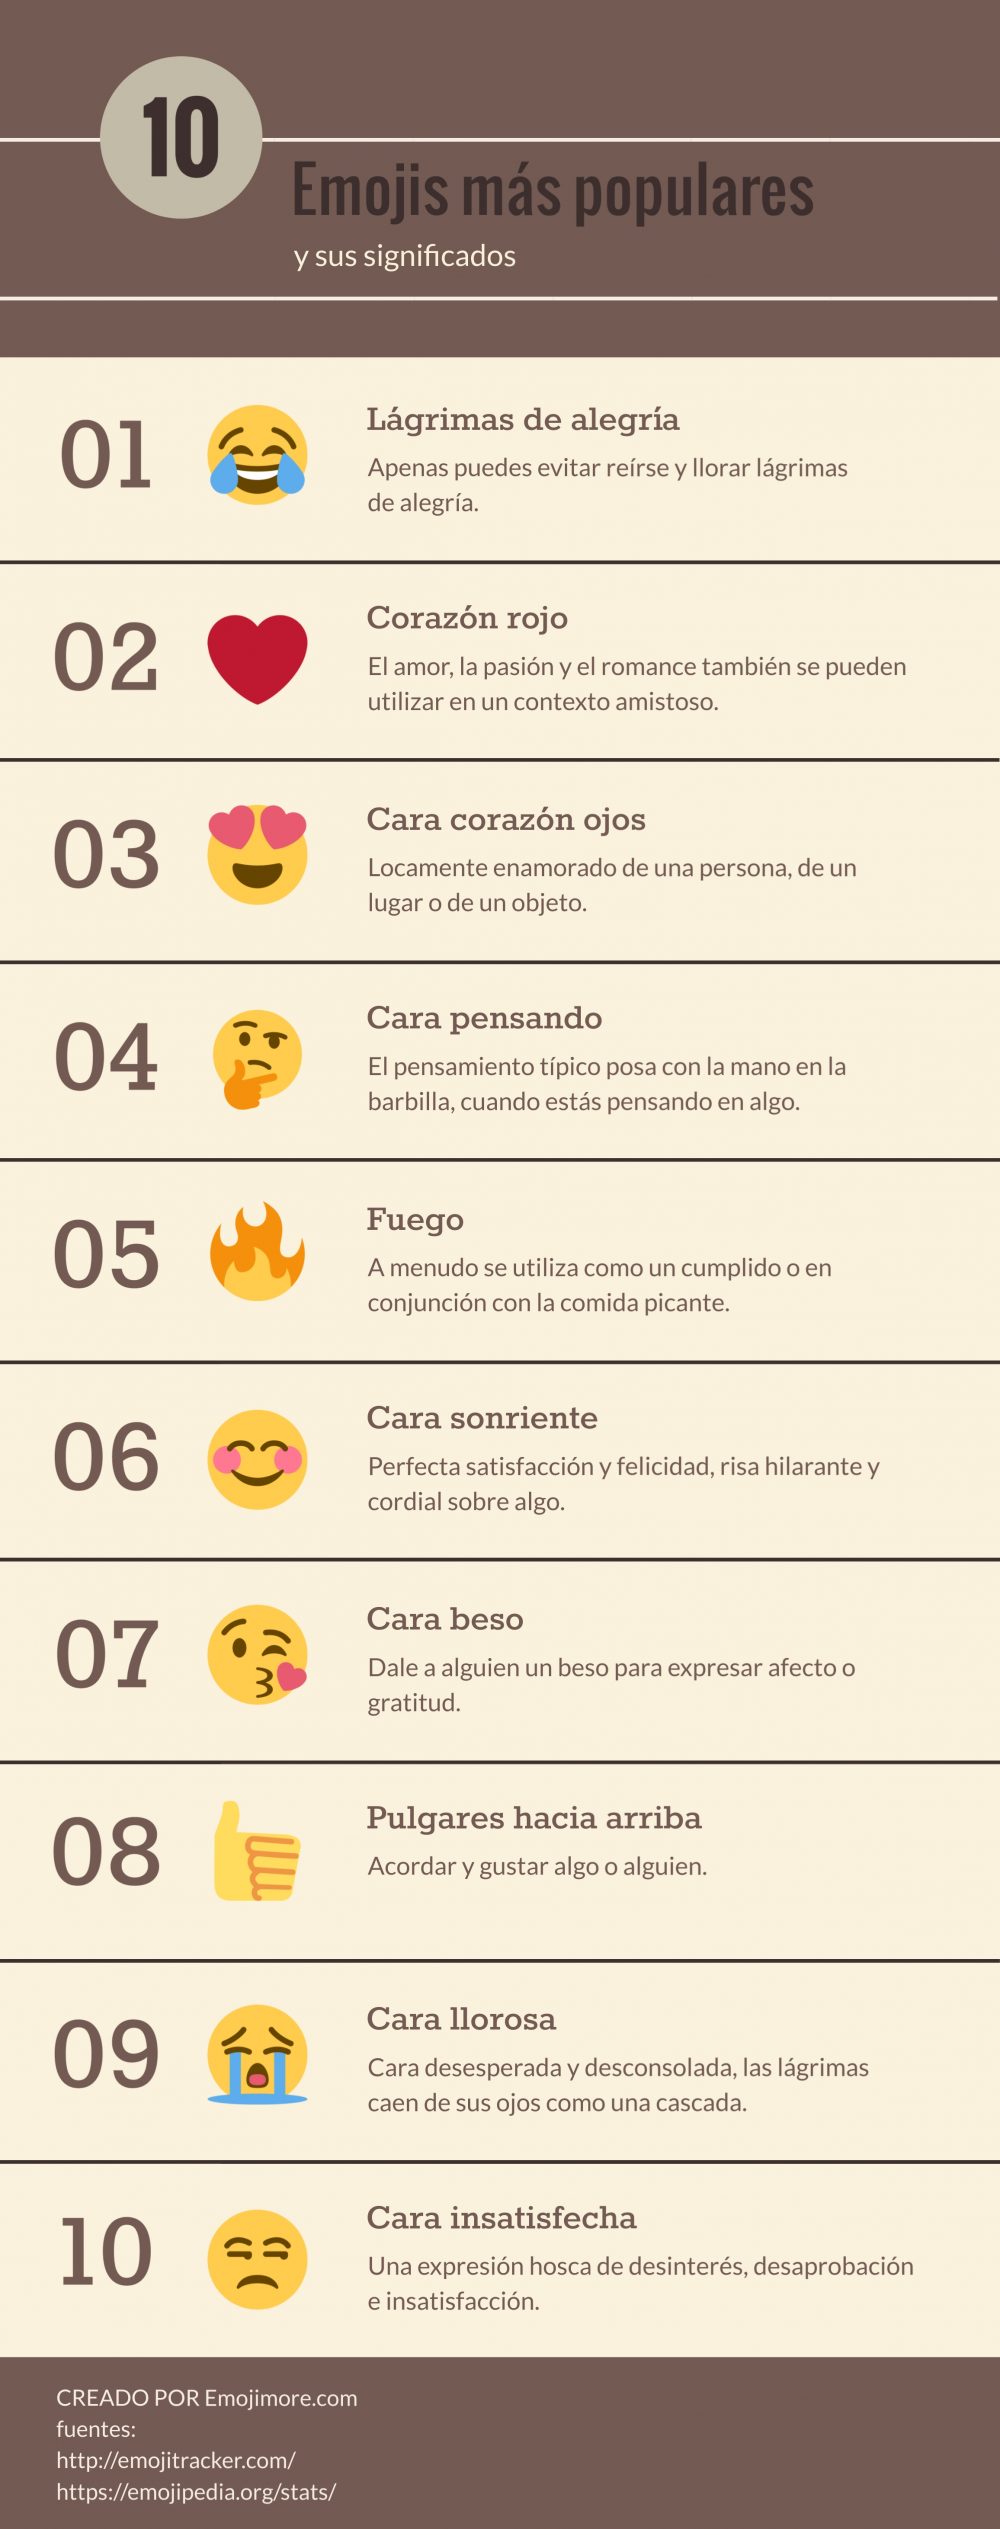 10 Emojis mas populares infografia